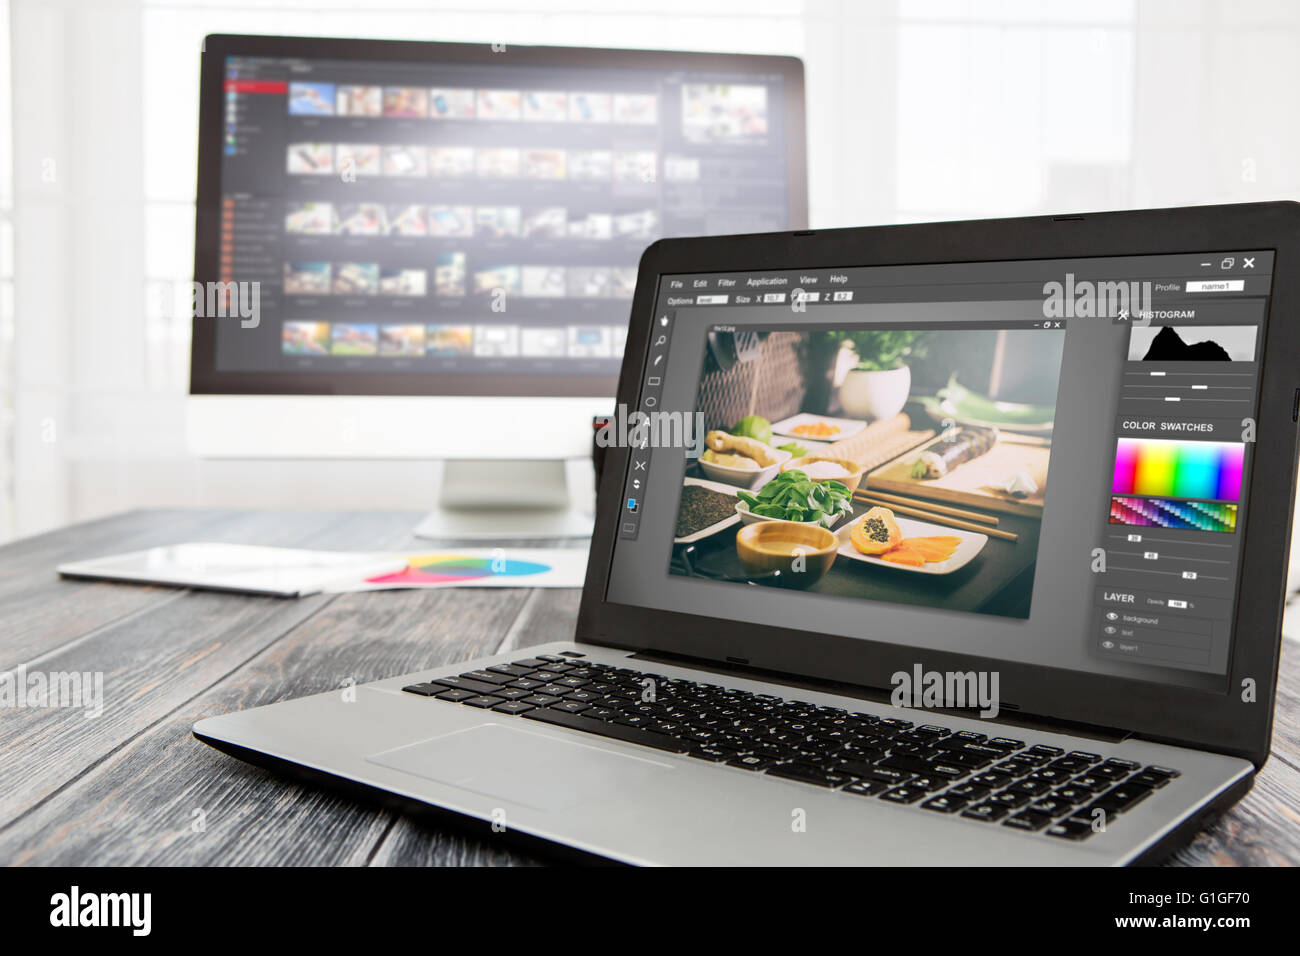 Fotógrafo editor cámara portátil de diseño monitor pantalla fotográfica fotografía - stock image Foto de stock